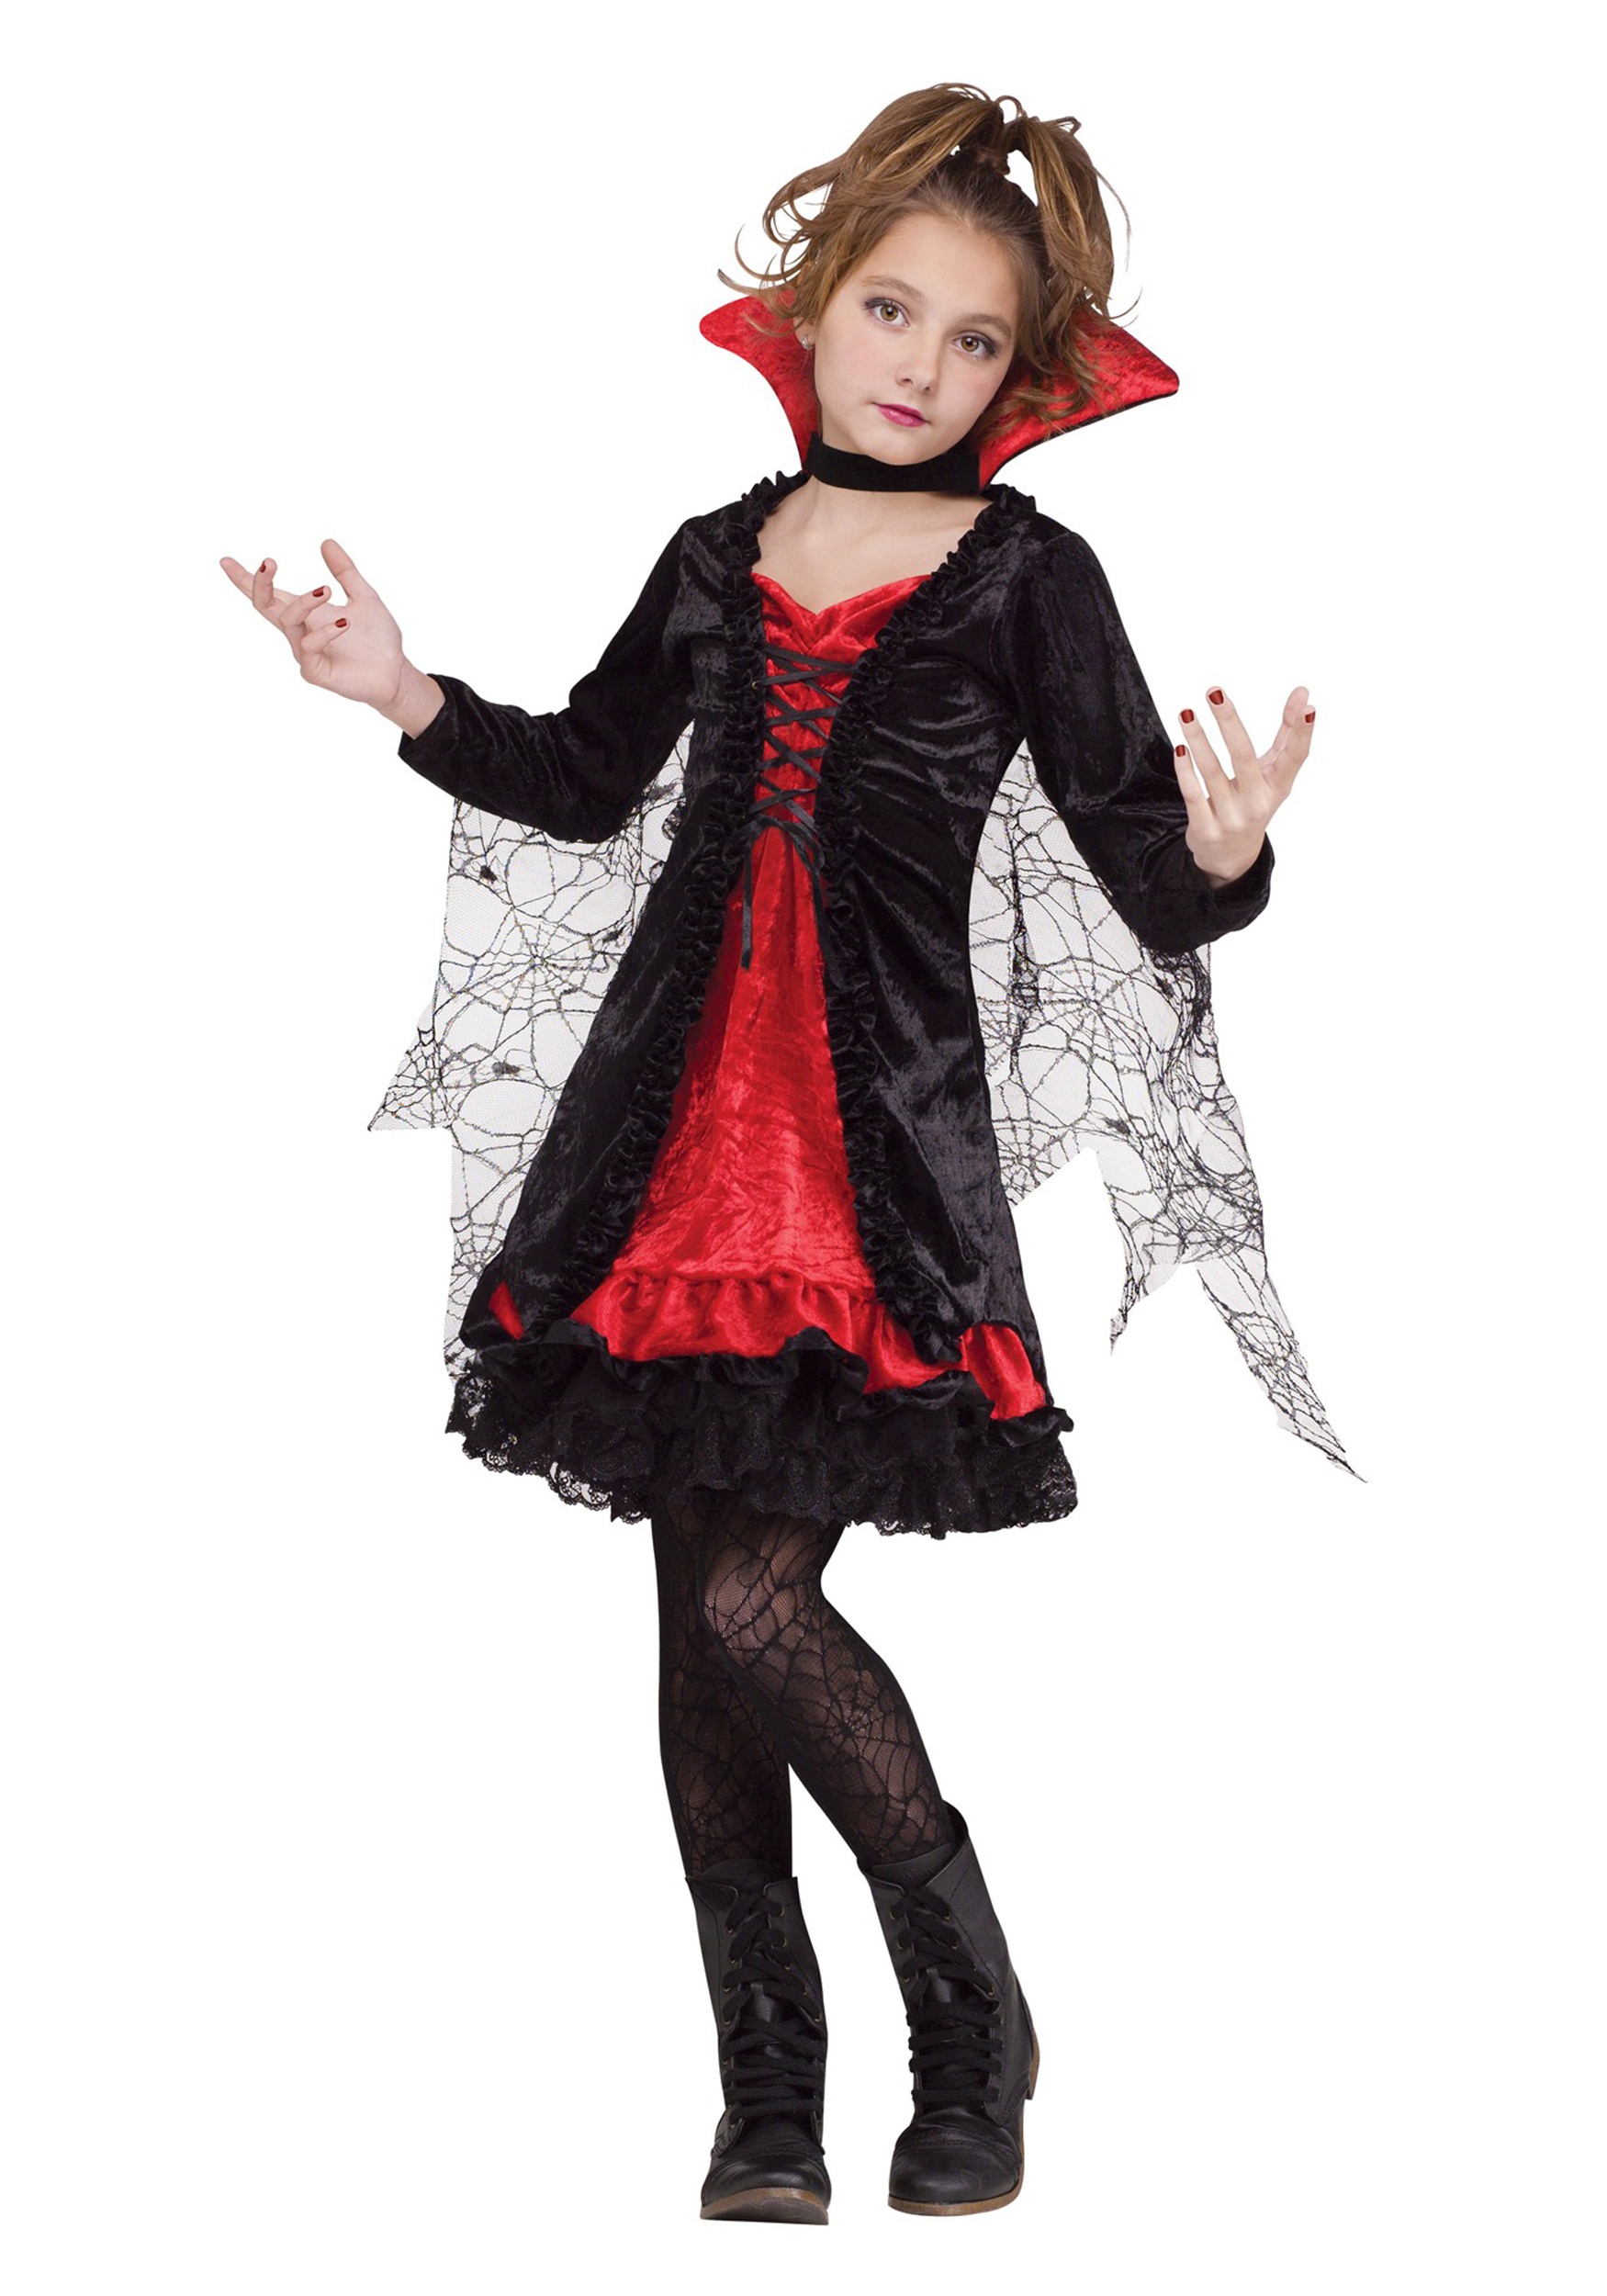 Photos - Fancy Dress Fun World Vampire Web Costume for Girls Black/Red FU116142